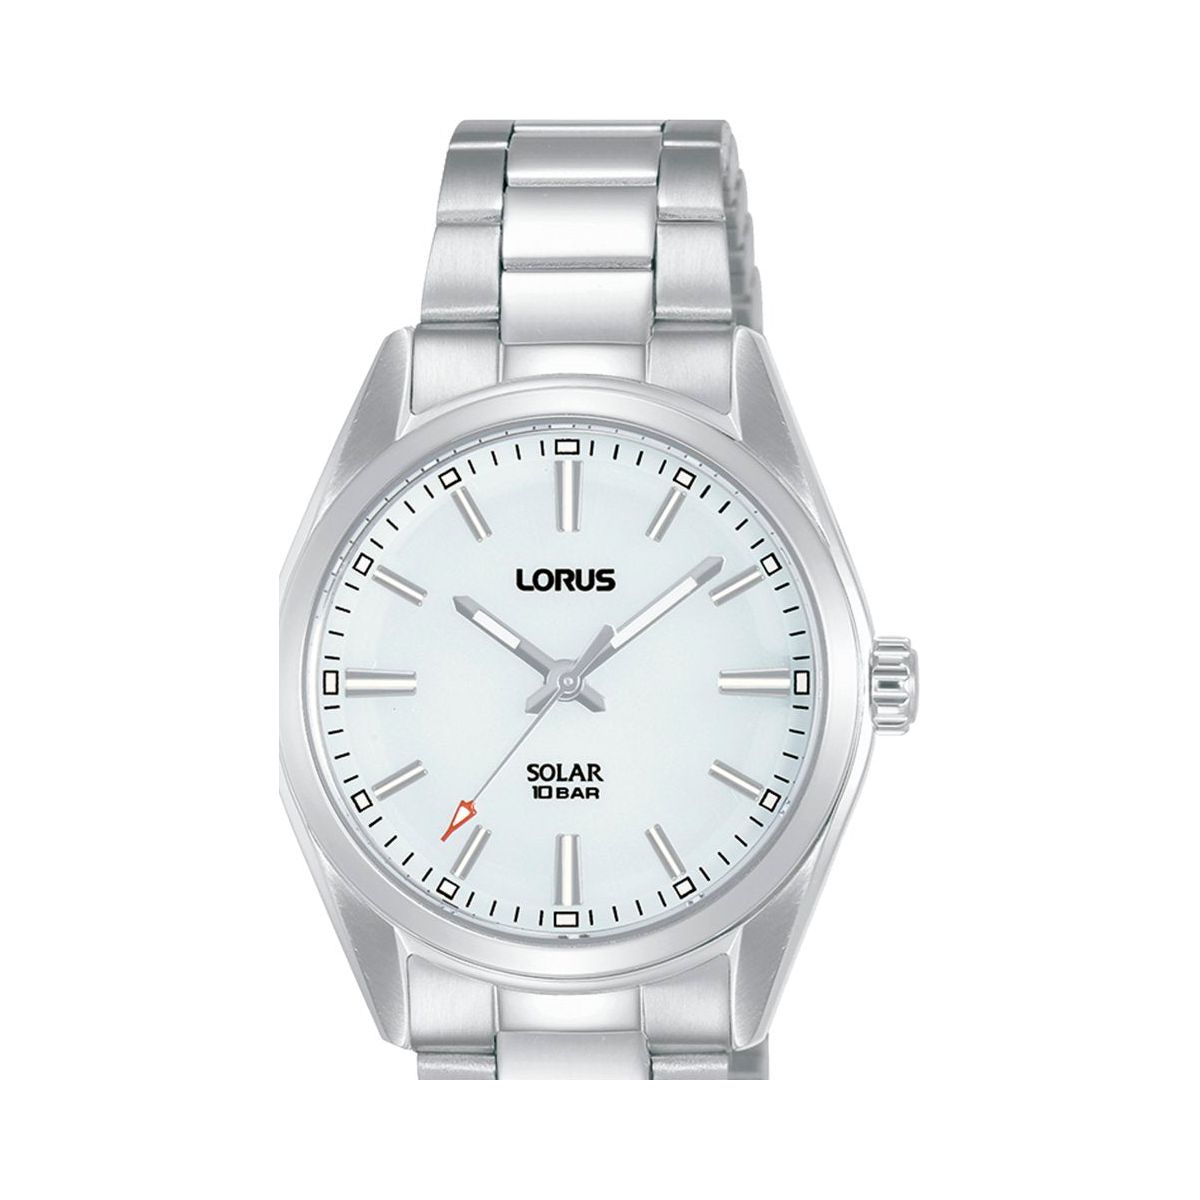 LORUS LORUS WATCHES Mod. RY503AX9 WATCHES lorus-watches-mod-ry503ax9